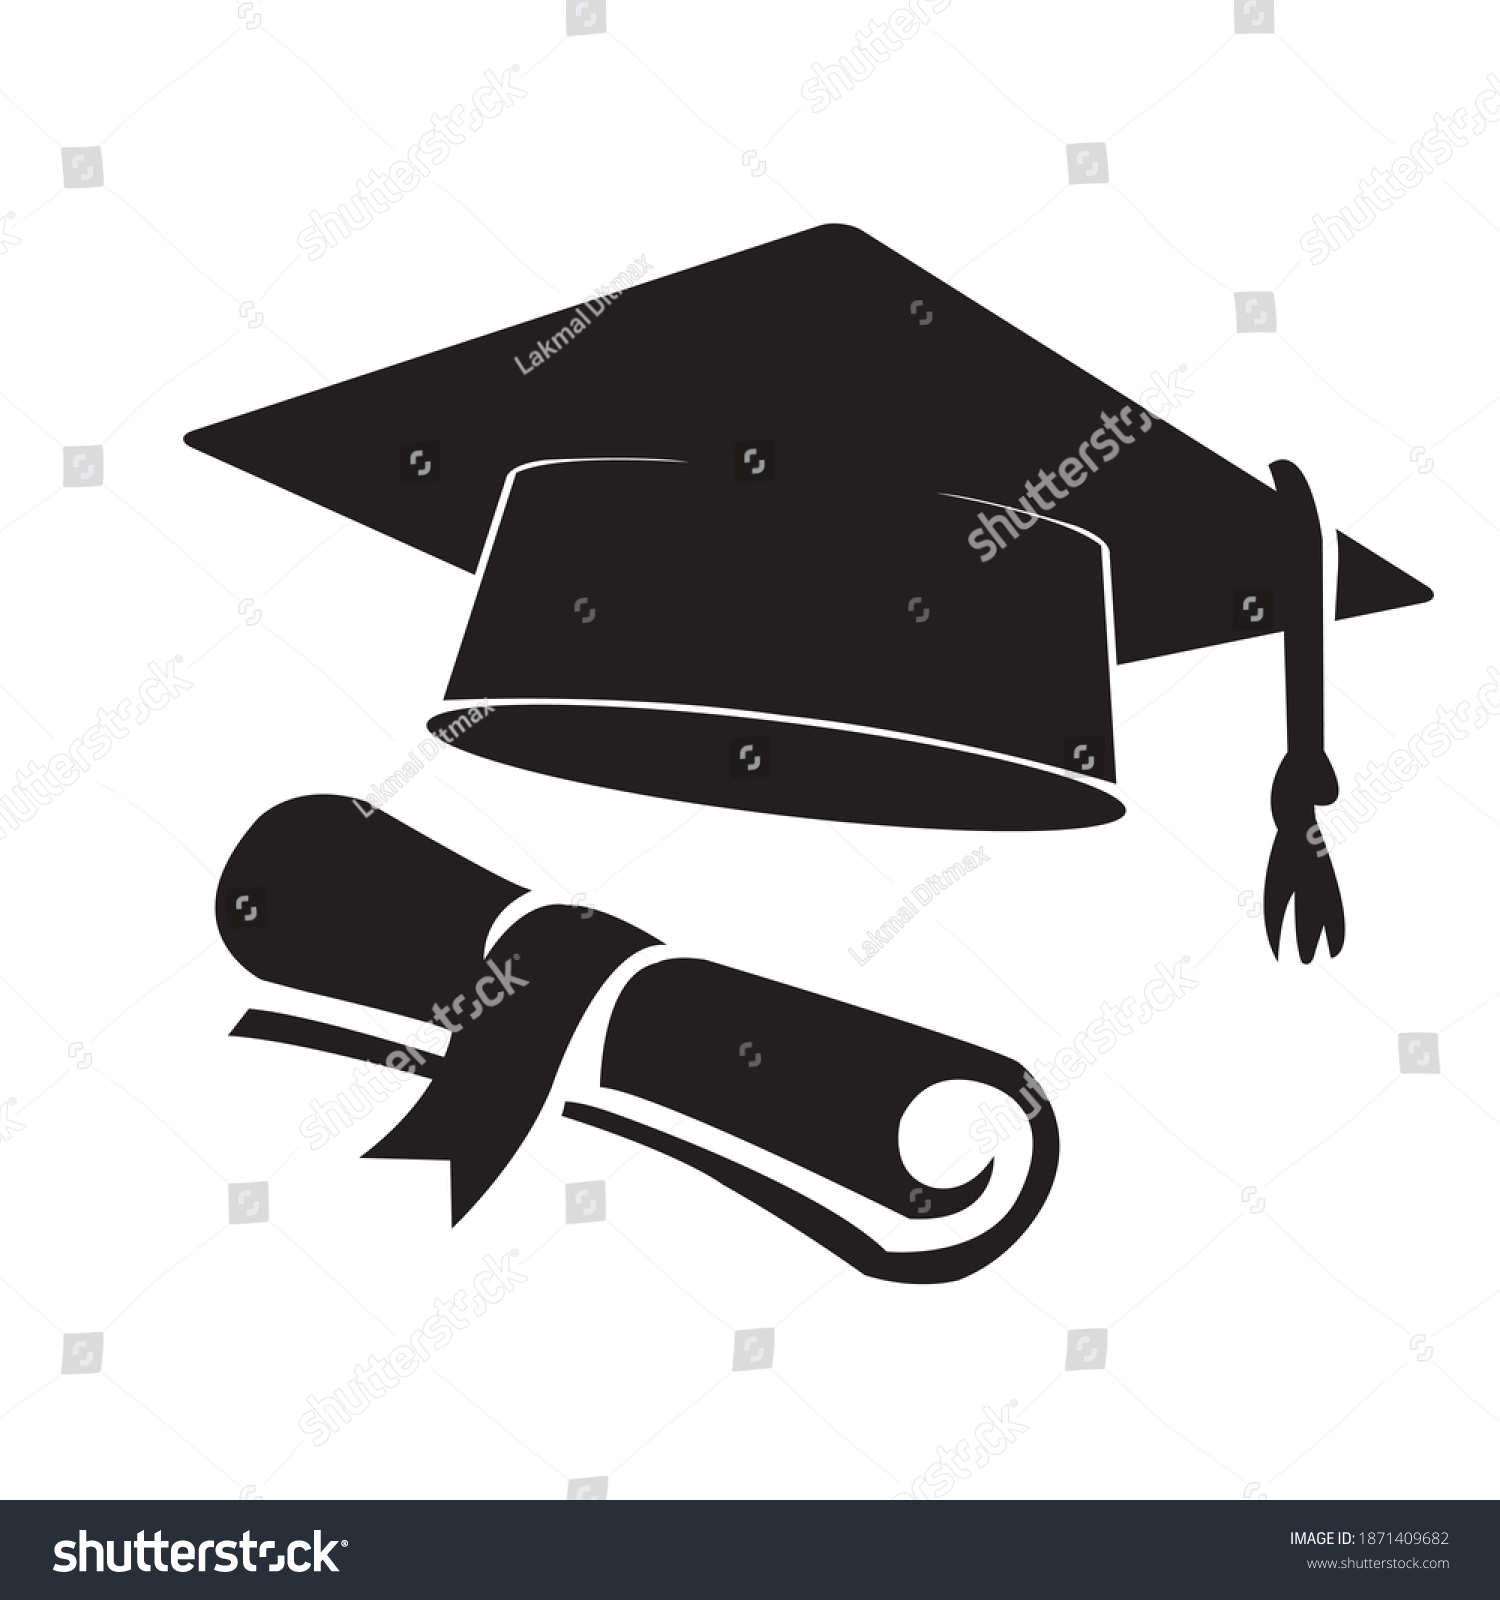 black graduation cap silhouette